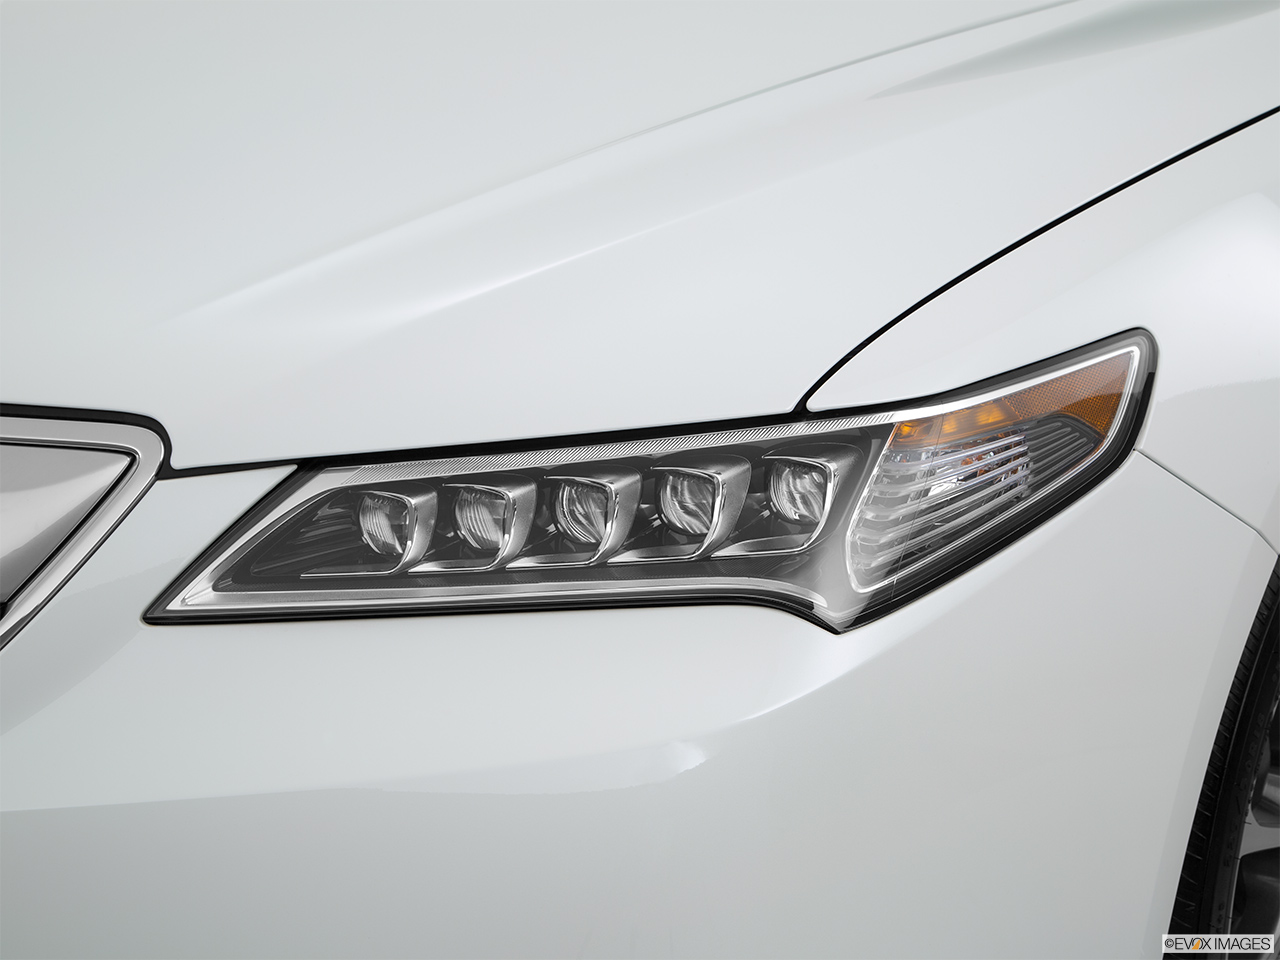 2015 Acura TLX 3.5 V-6 9-AT SH-AWD Drivers Side Headlight. 